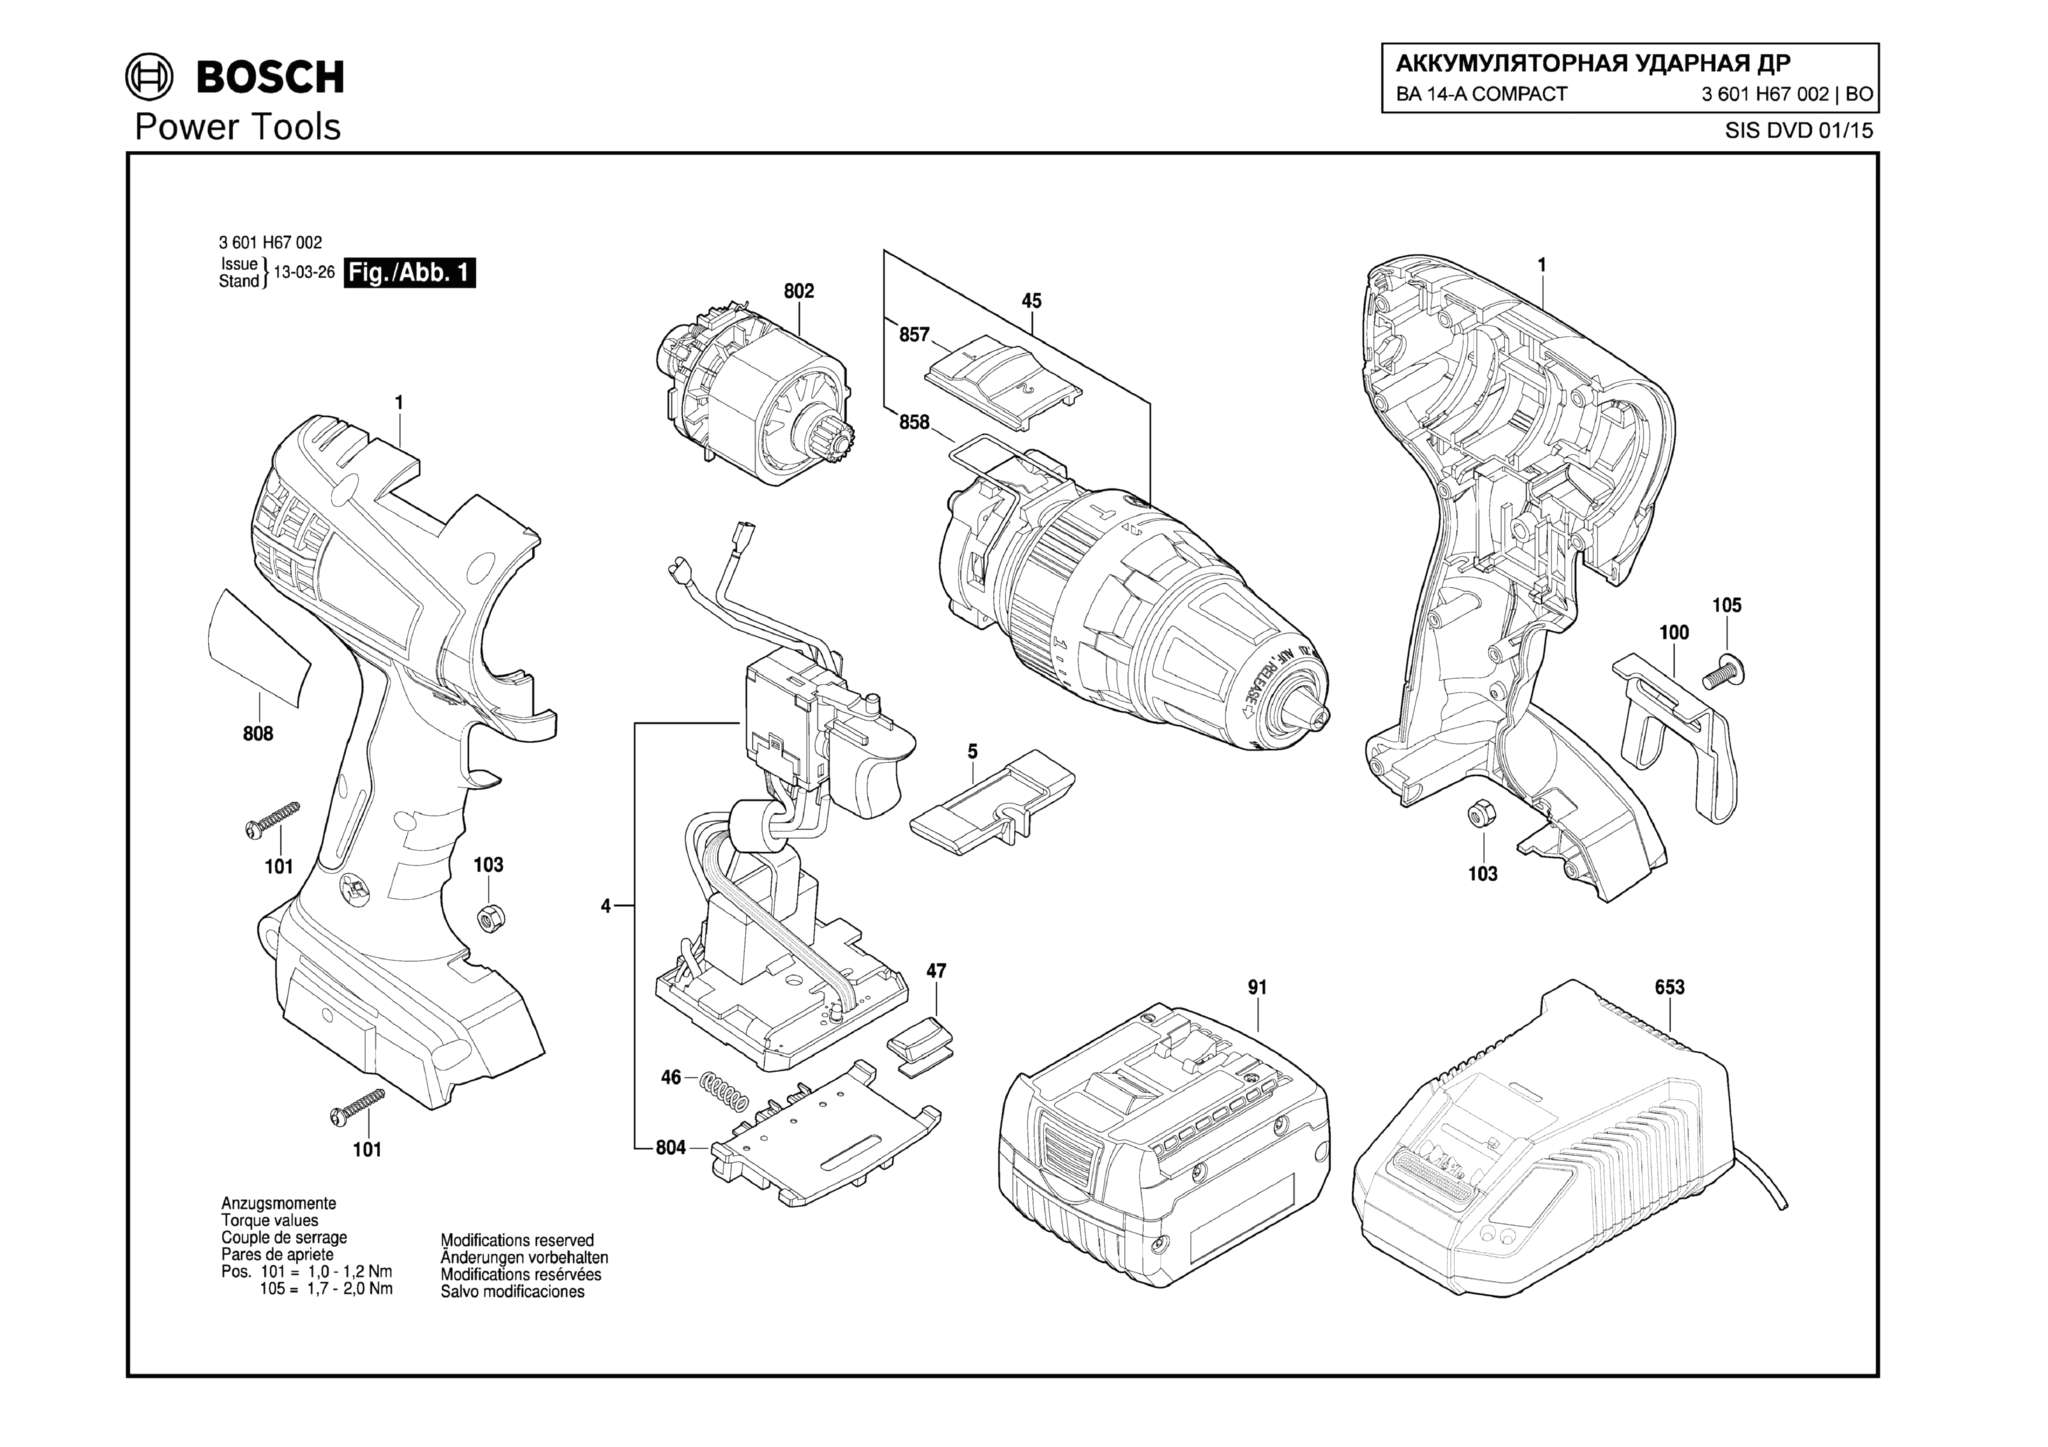 Запчасти, схема и деталировка Bosch BA 14-A COMPACT (ТИП 3601H67002)